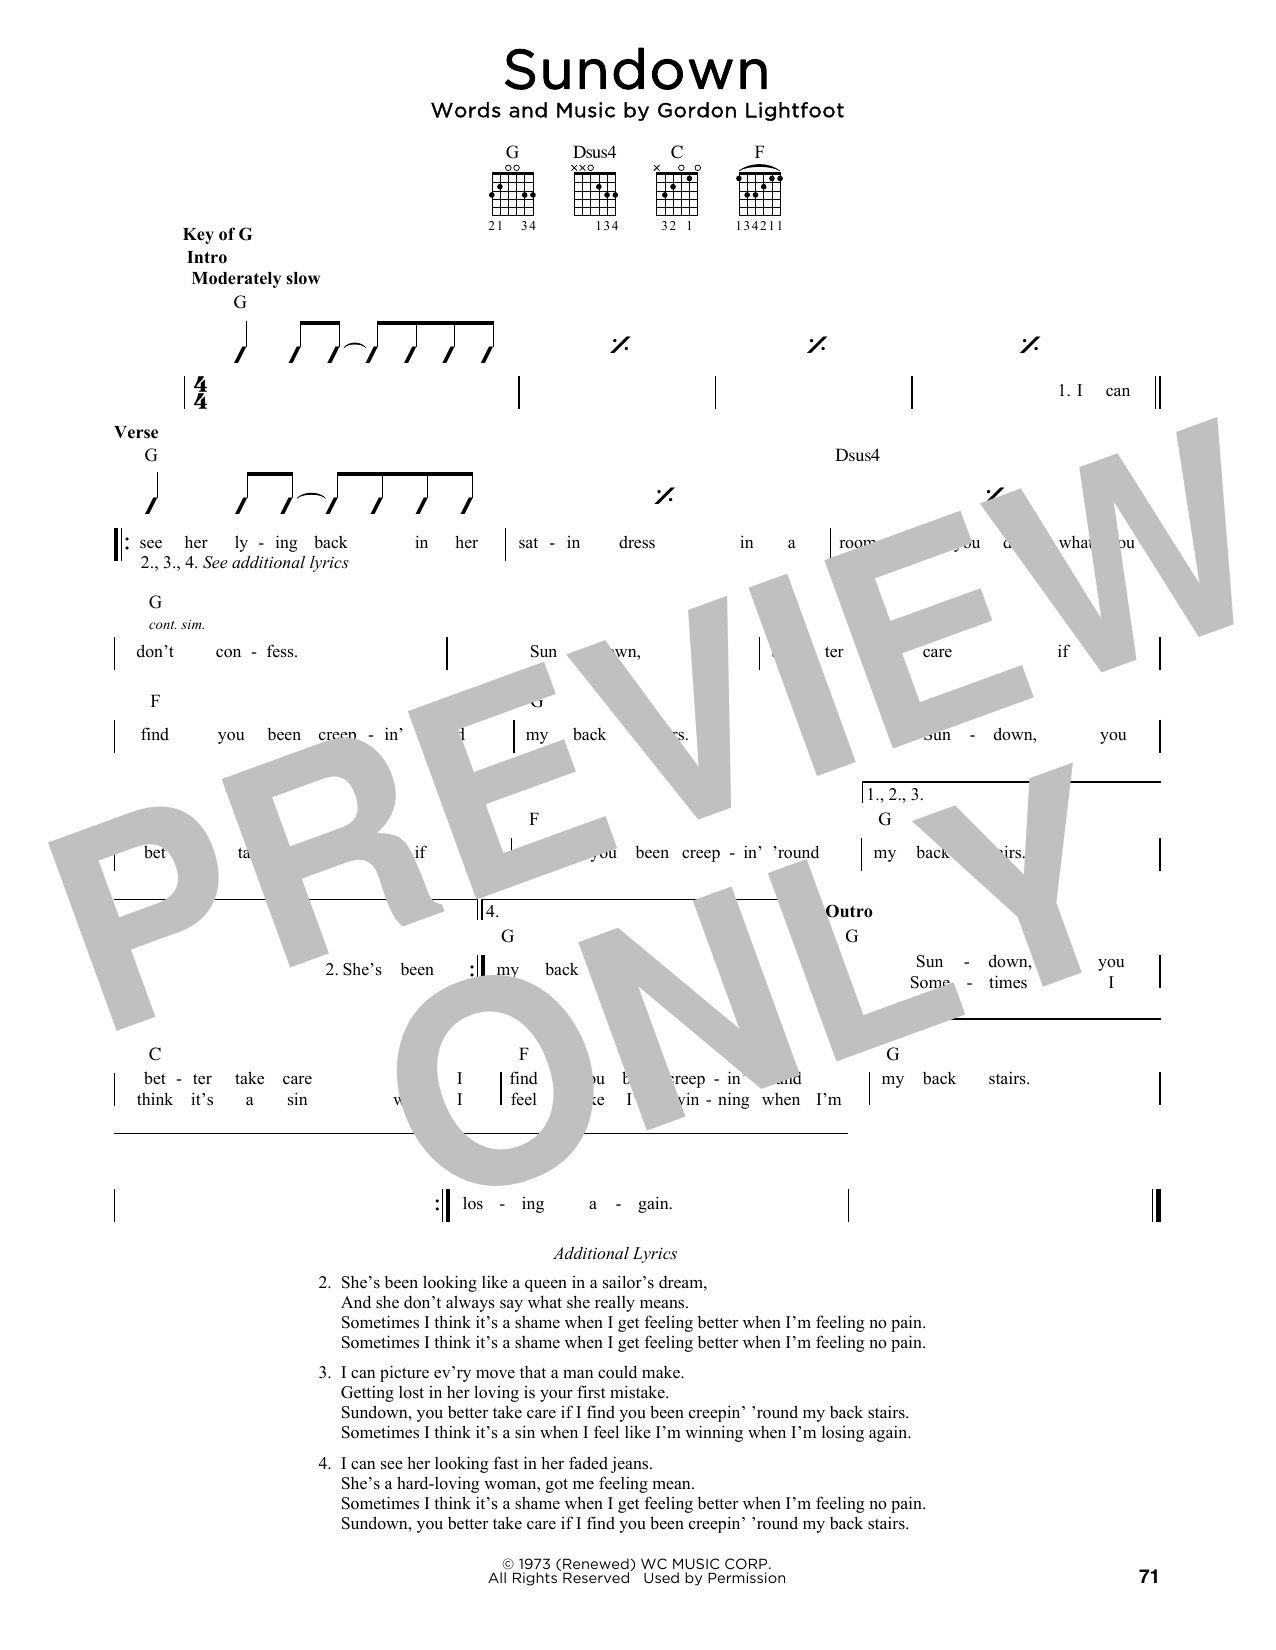 Gordon Lightfoot Sundown Sheet Music Notes & Chords for Solo Guitar - Download or Print PDF